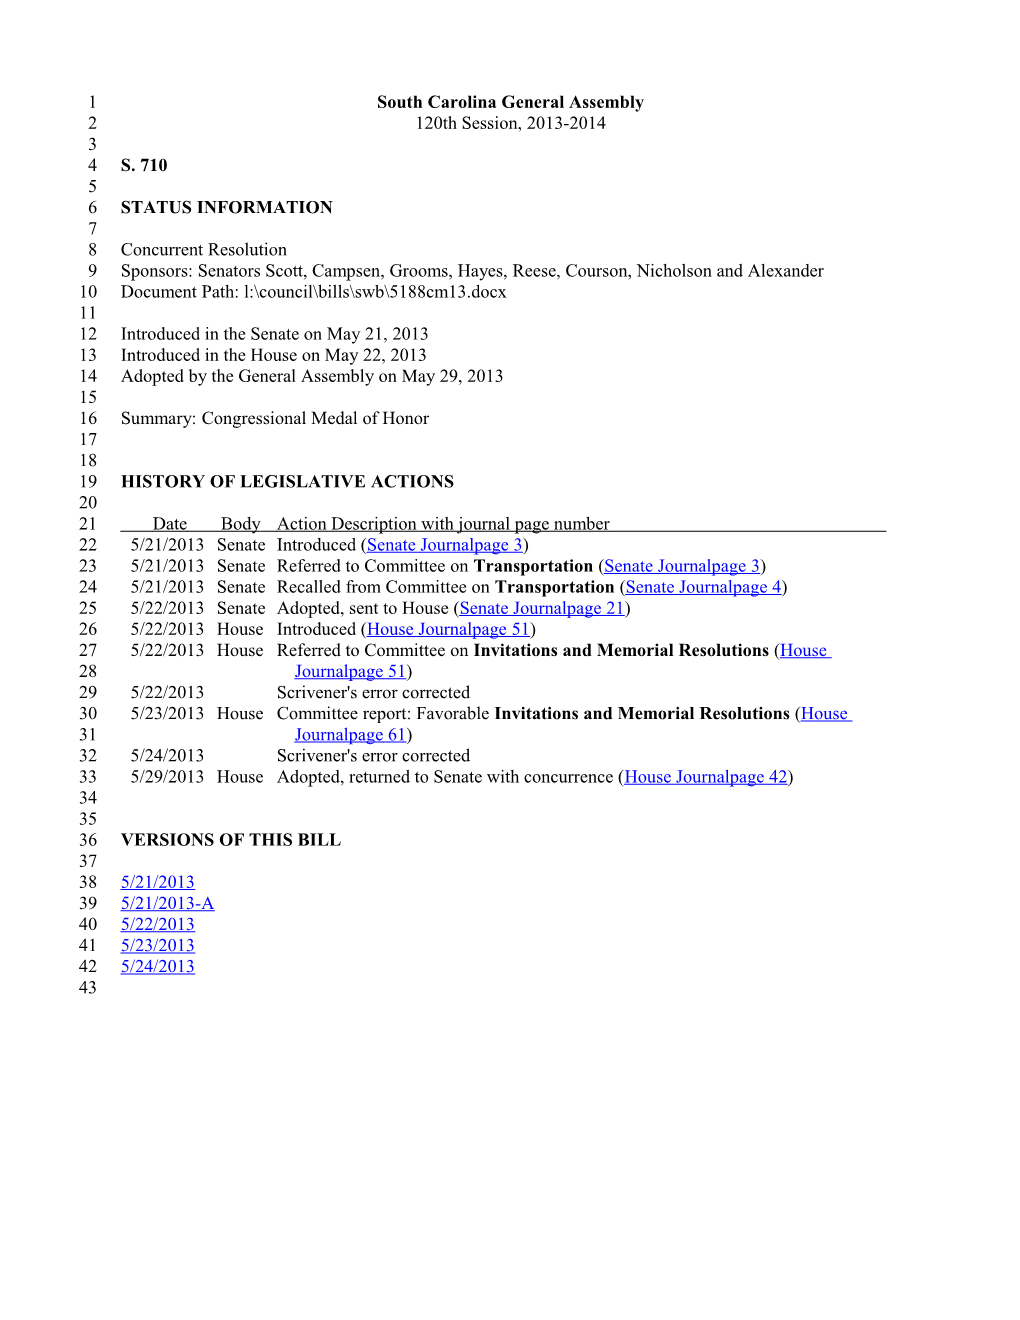 2013-2014 Bill 710: Congressional Medal of Honor - South Carolina Legislature Online